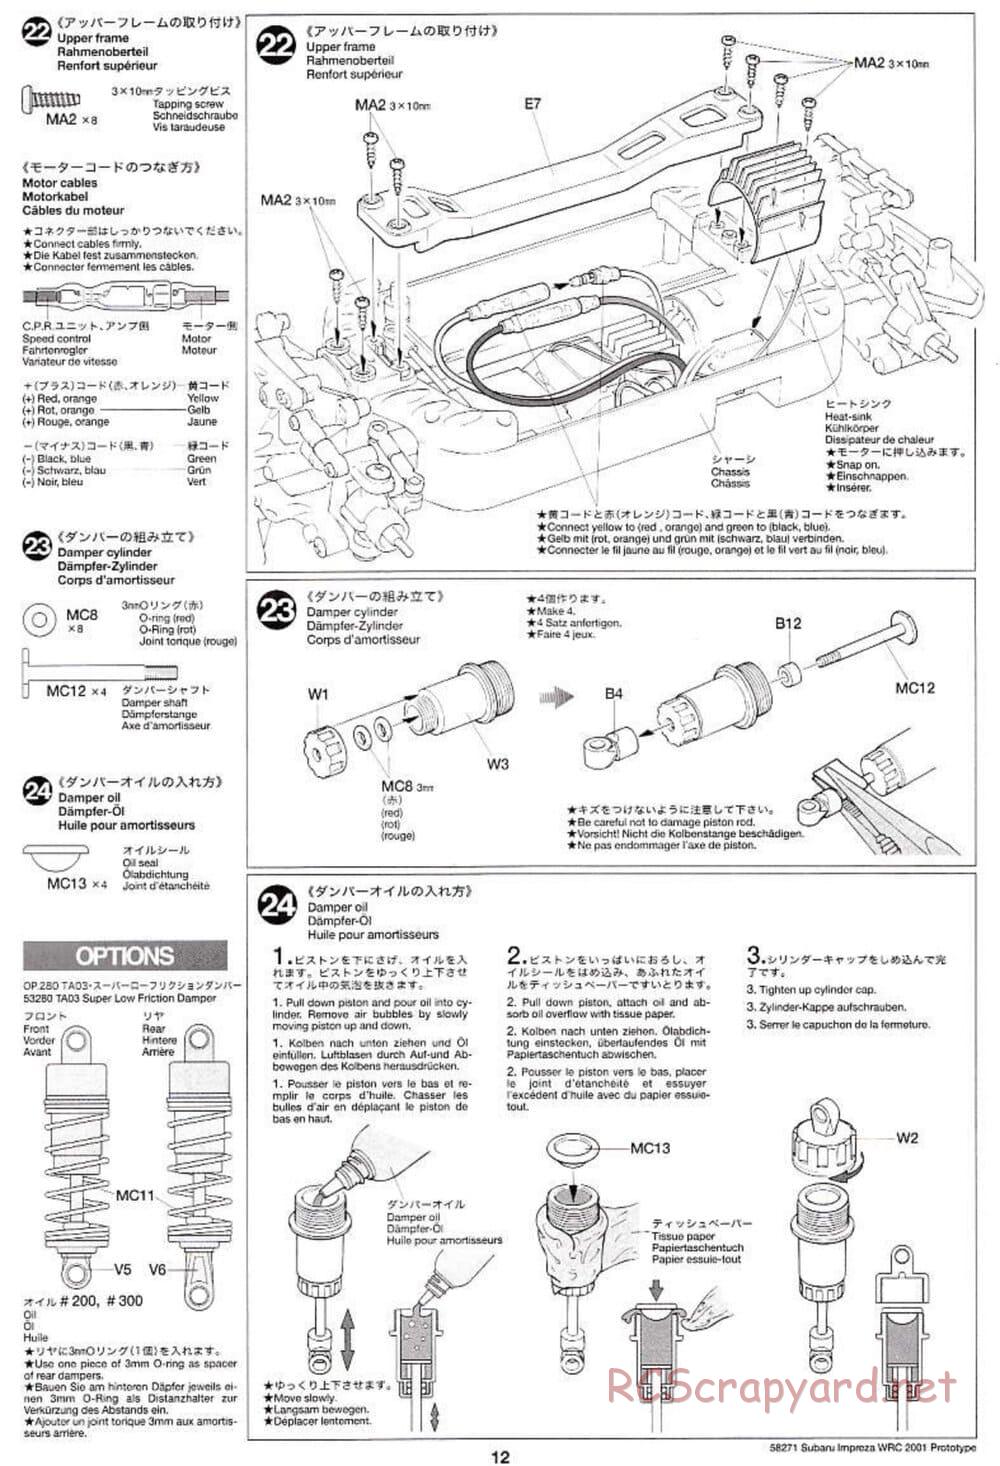 Tamiya - Subaru Impreza WRC 2001 Prototype - TB-01 Chassis - Manual - Page 12